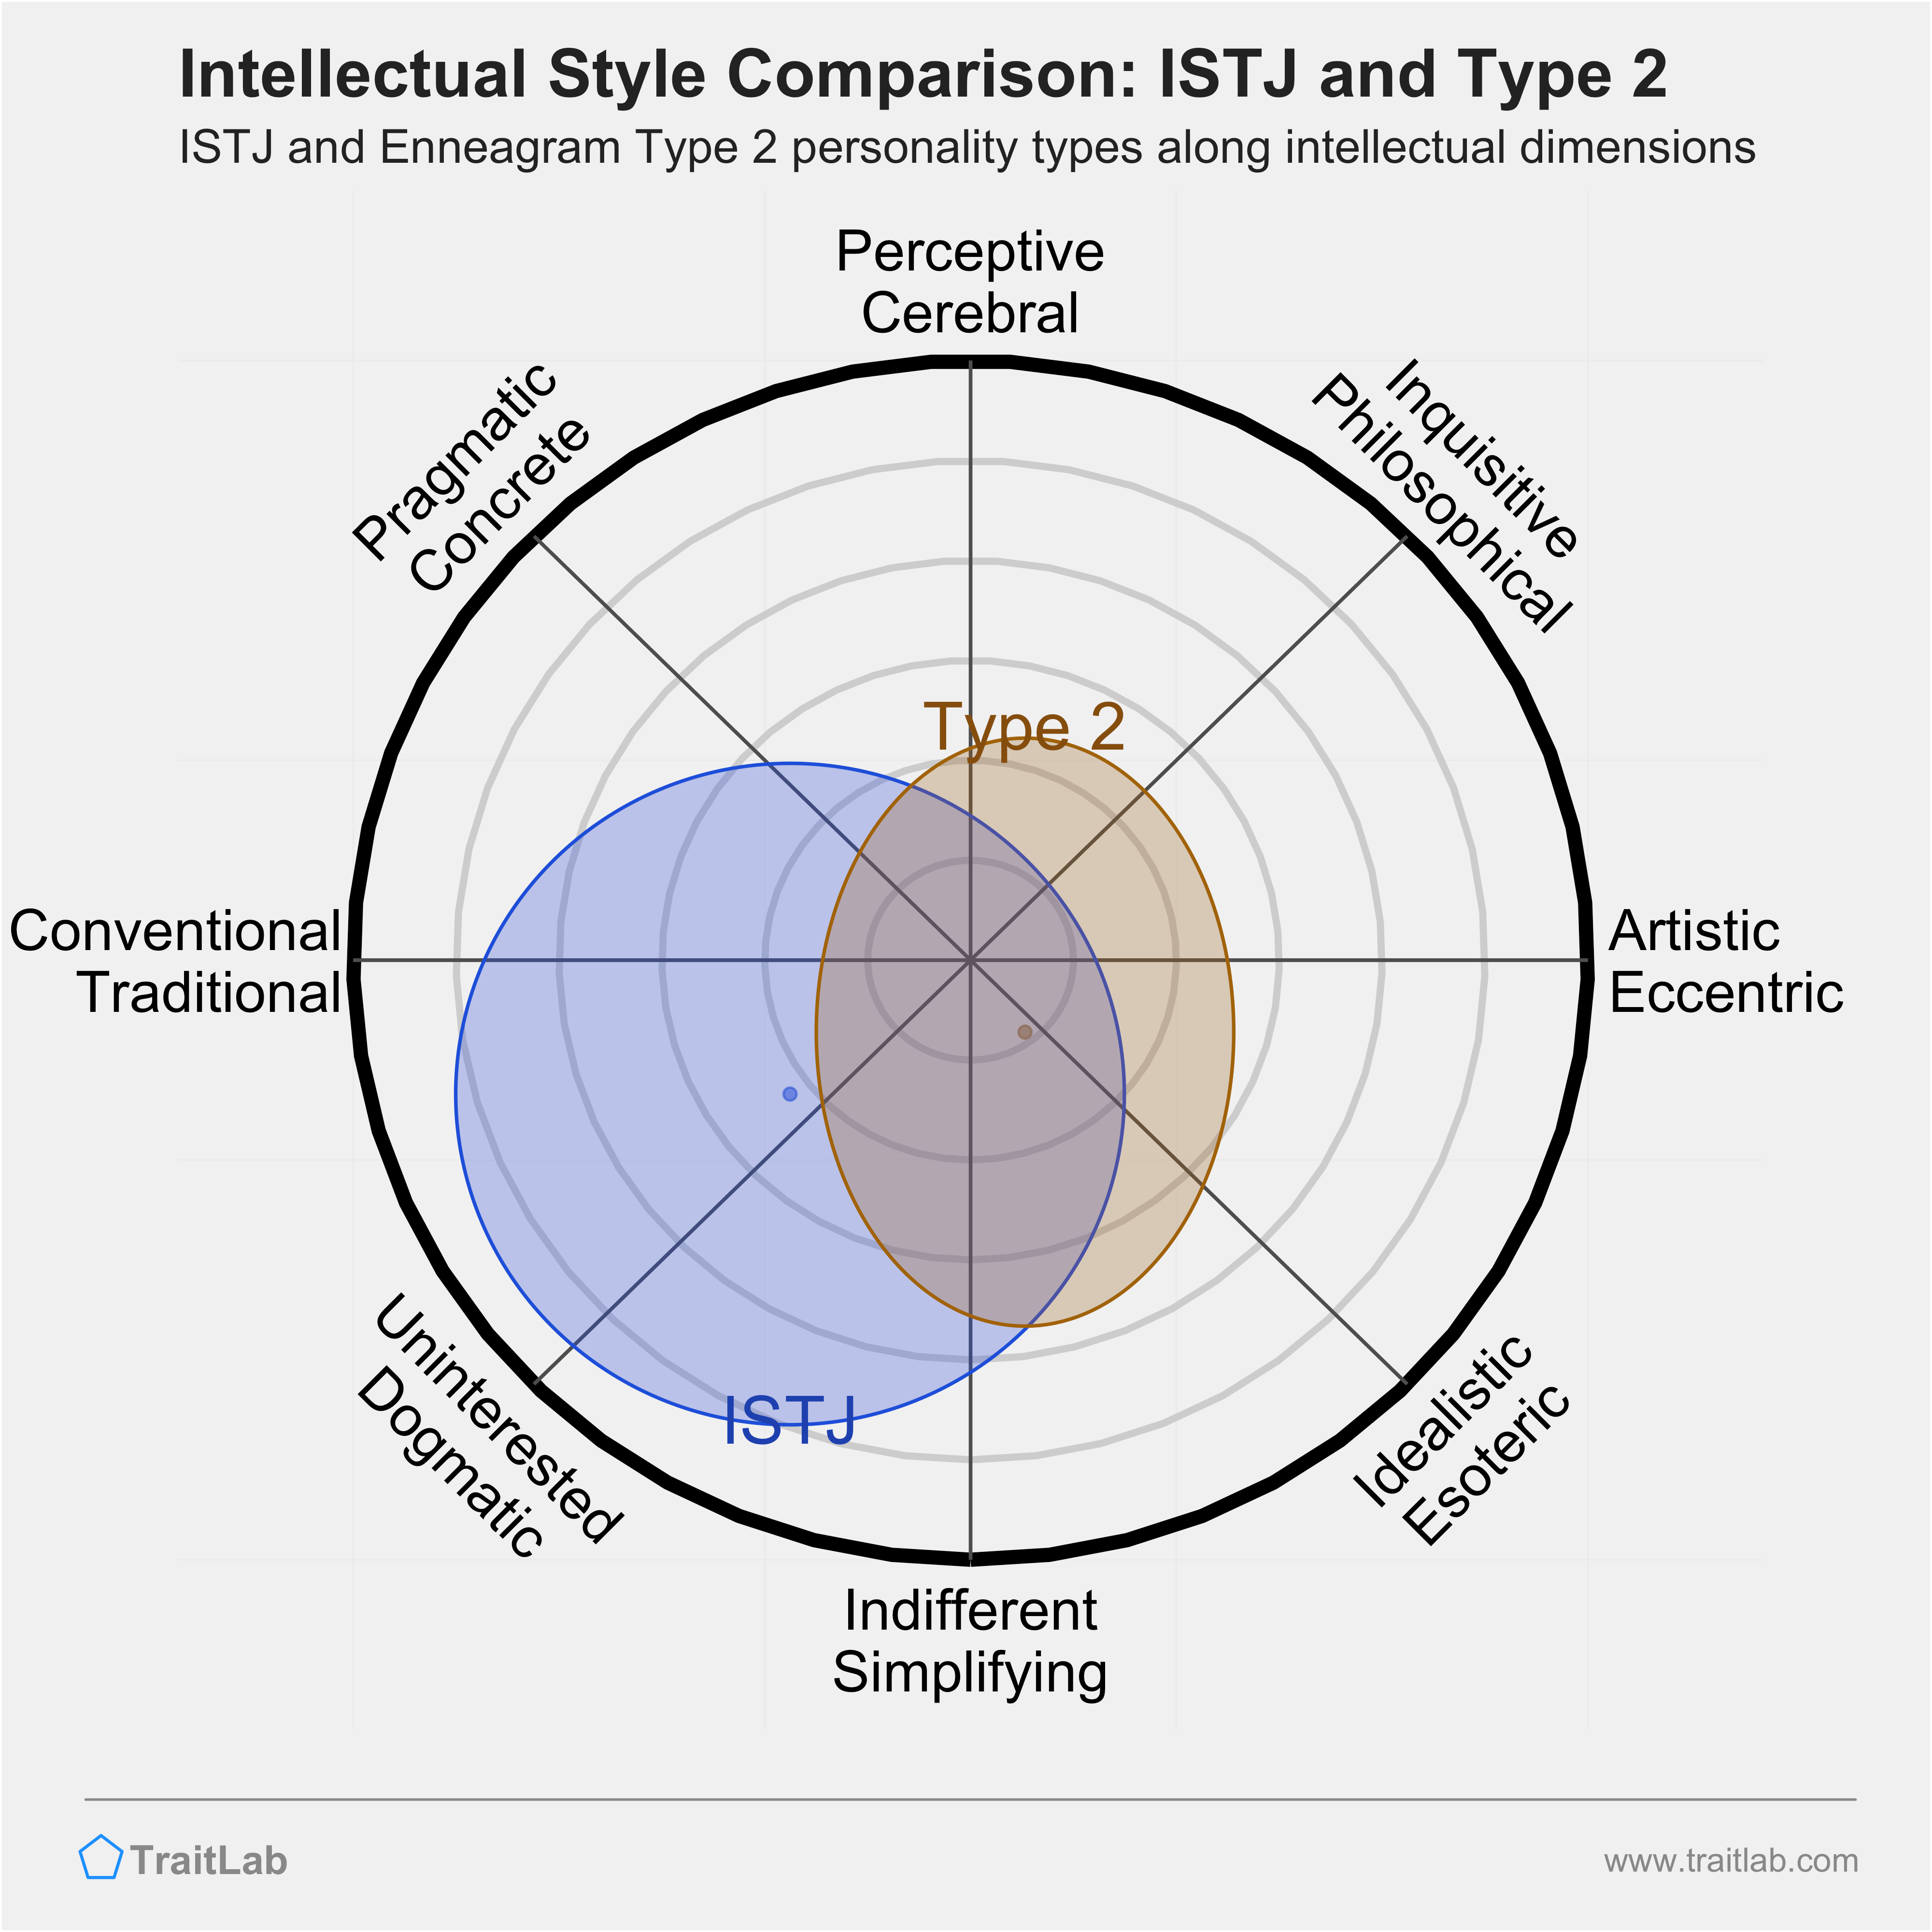 ISTJ and Type 2 comparison across intellectual dimensions